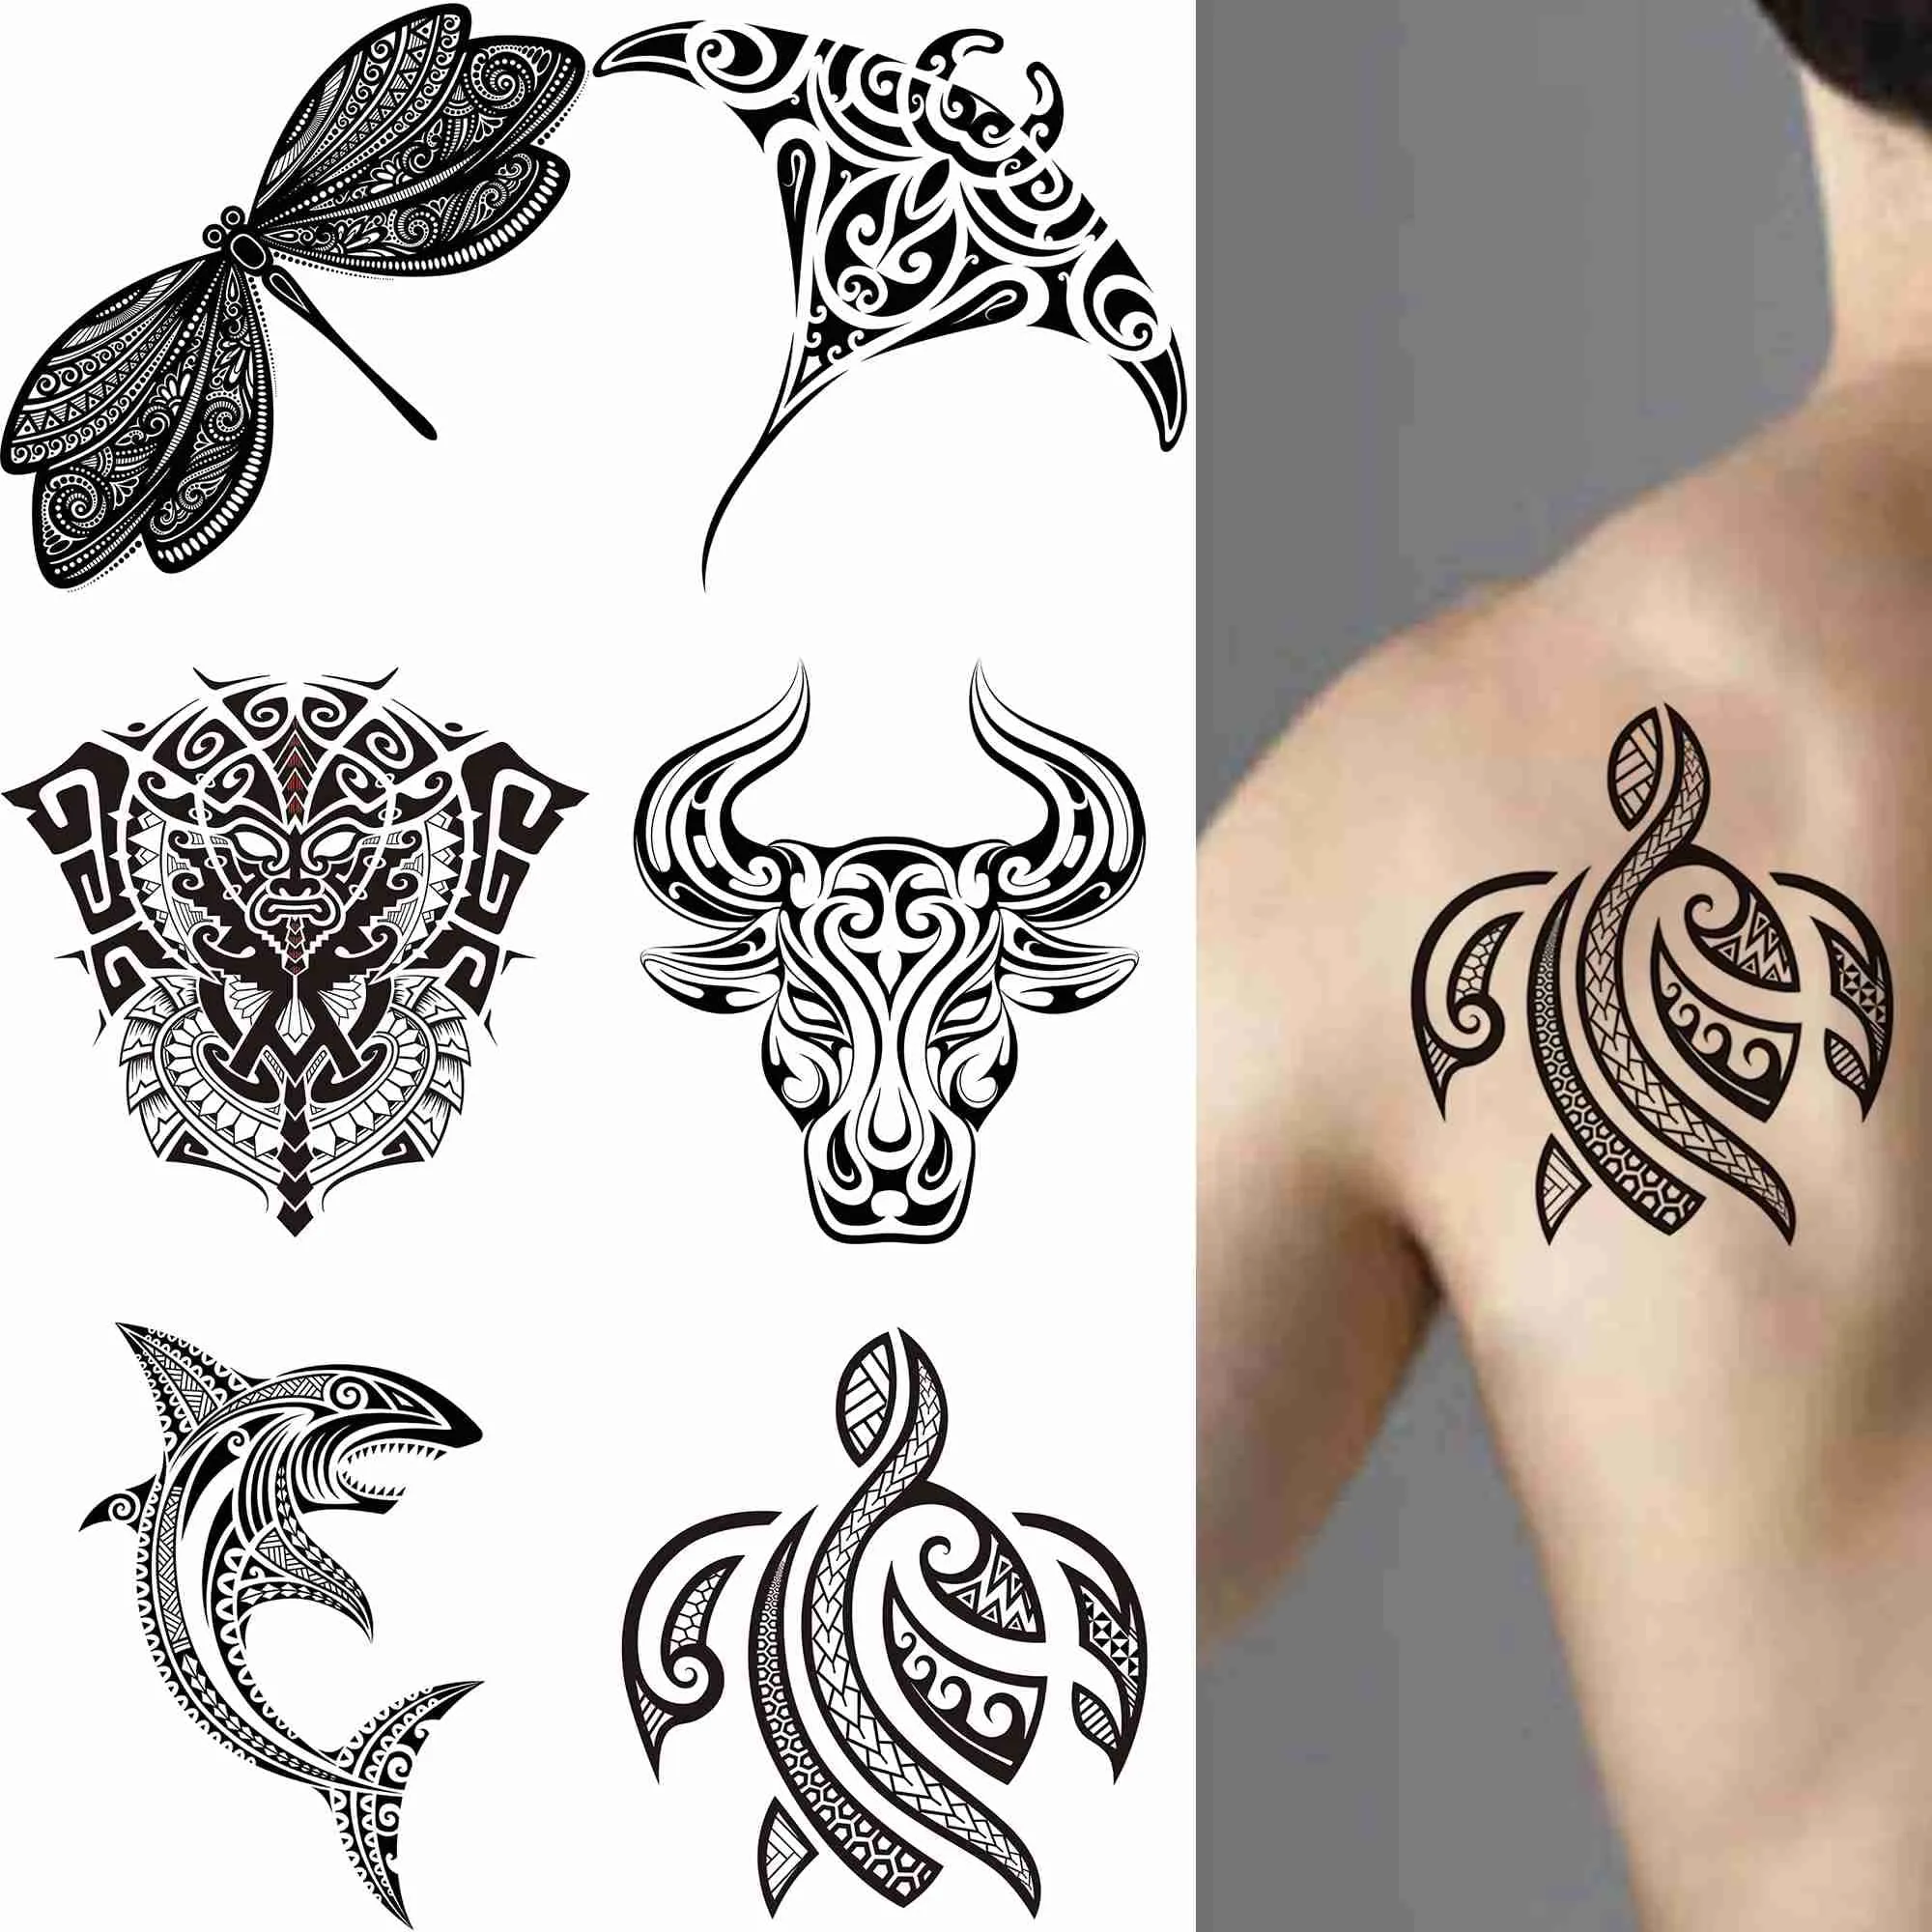 The Best Feminine Tattoos Of 2019 | Tiny tattoos for girls, Feminine tattoos,  Tattoos for women